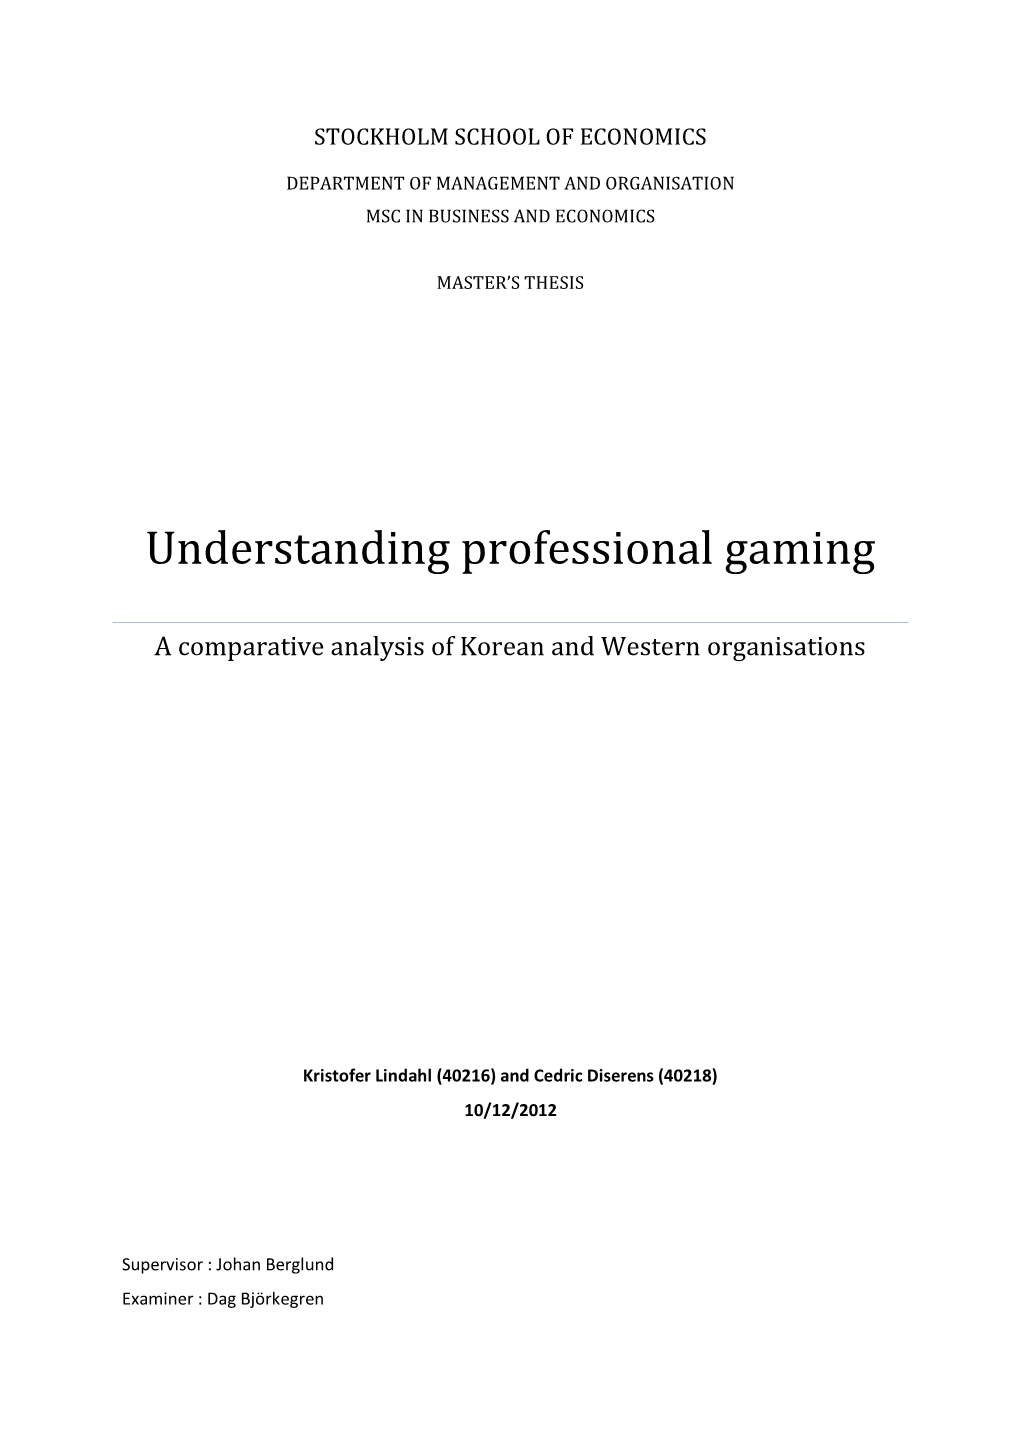 Understanding Professional Gaming